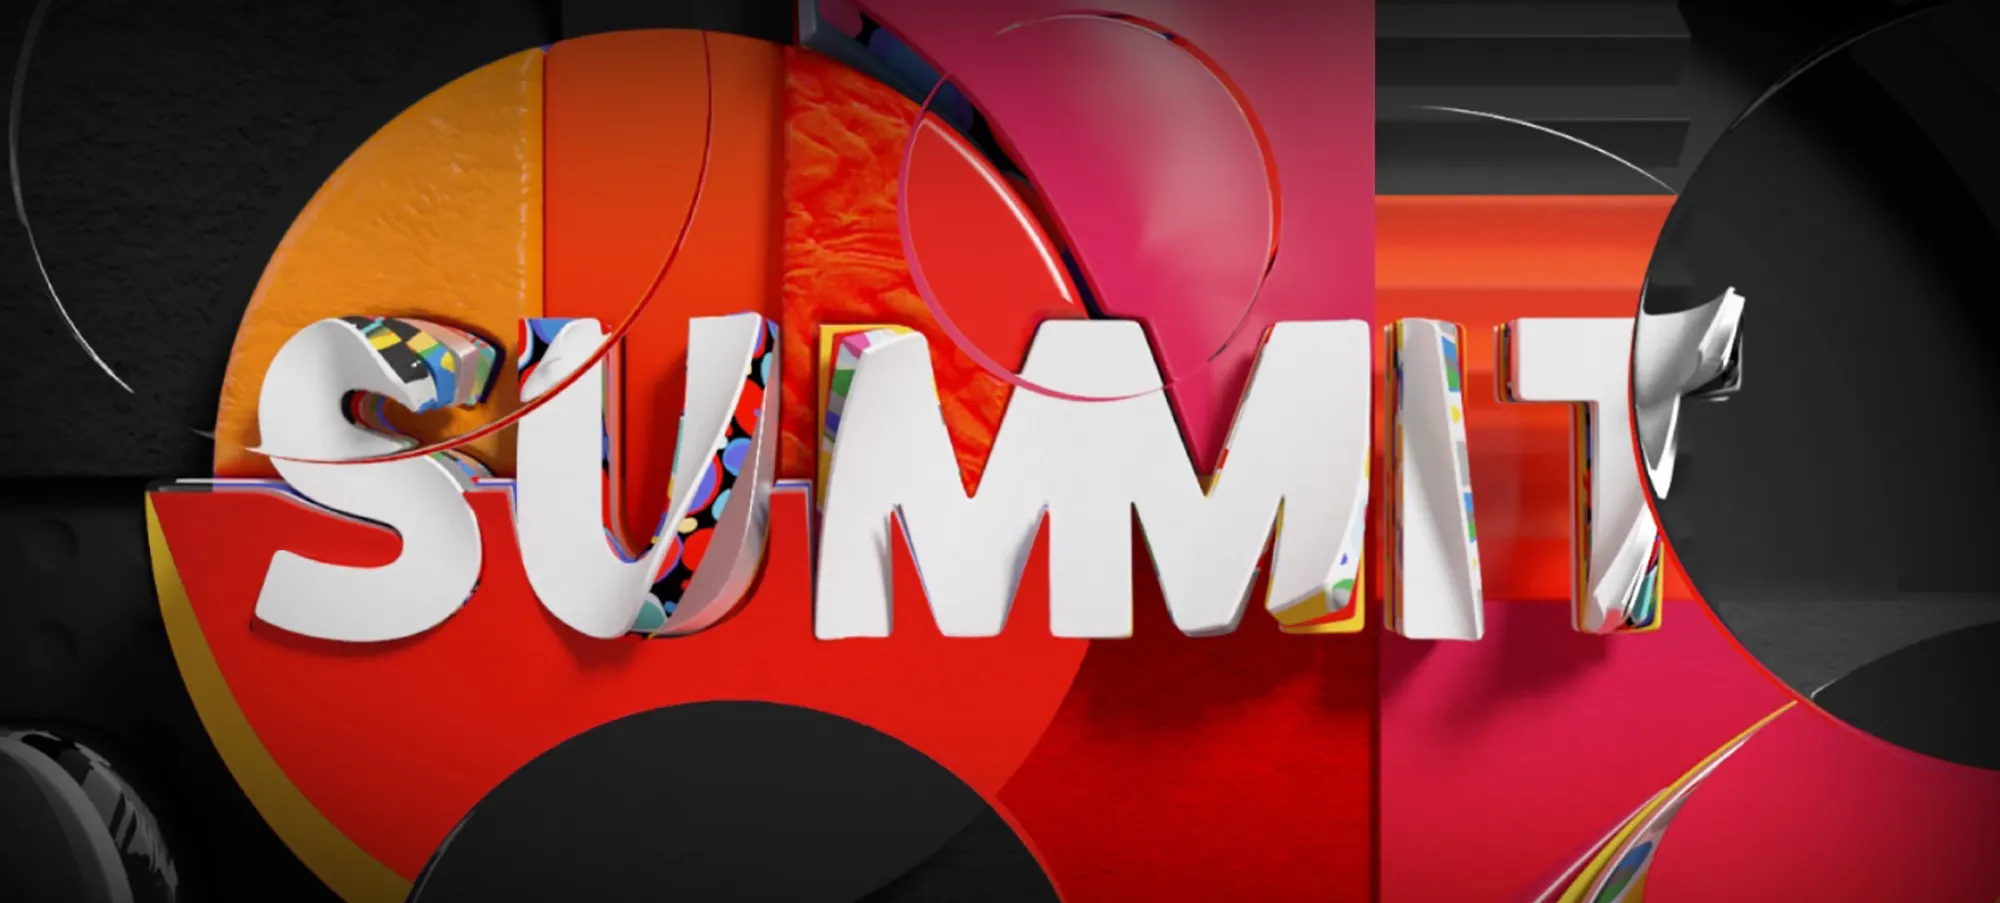 Adobe Summit logo.